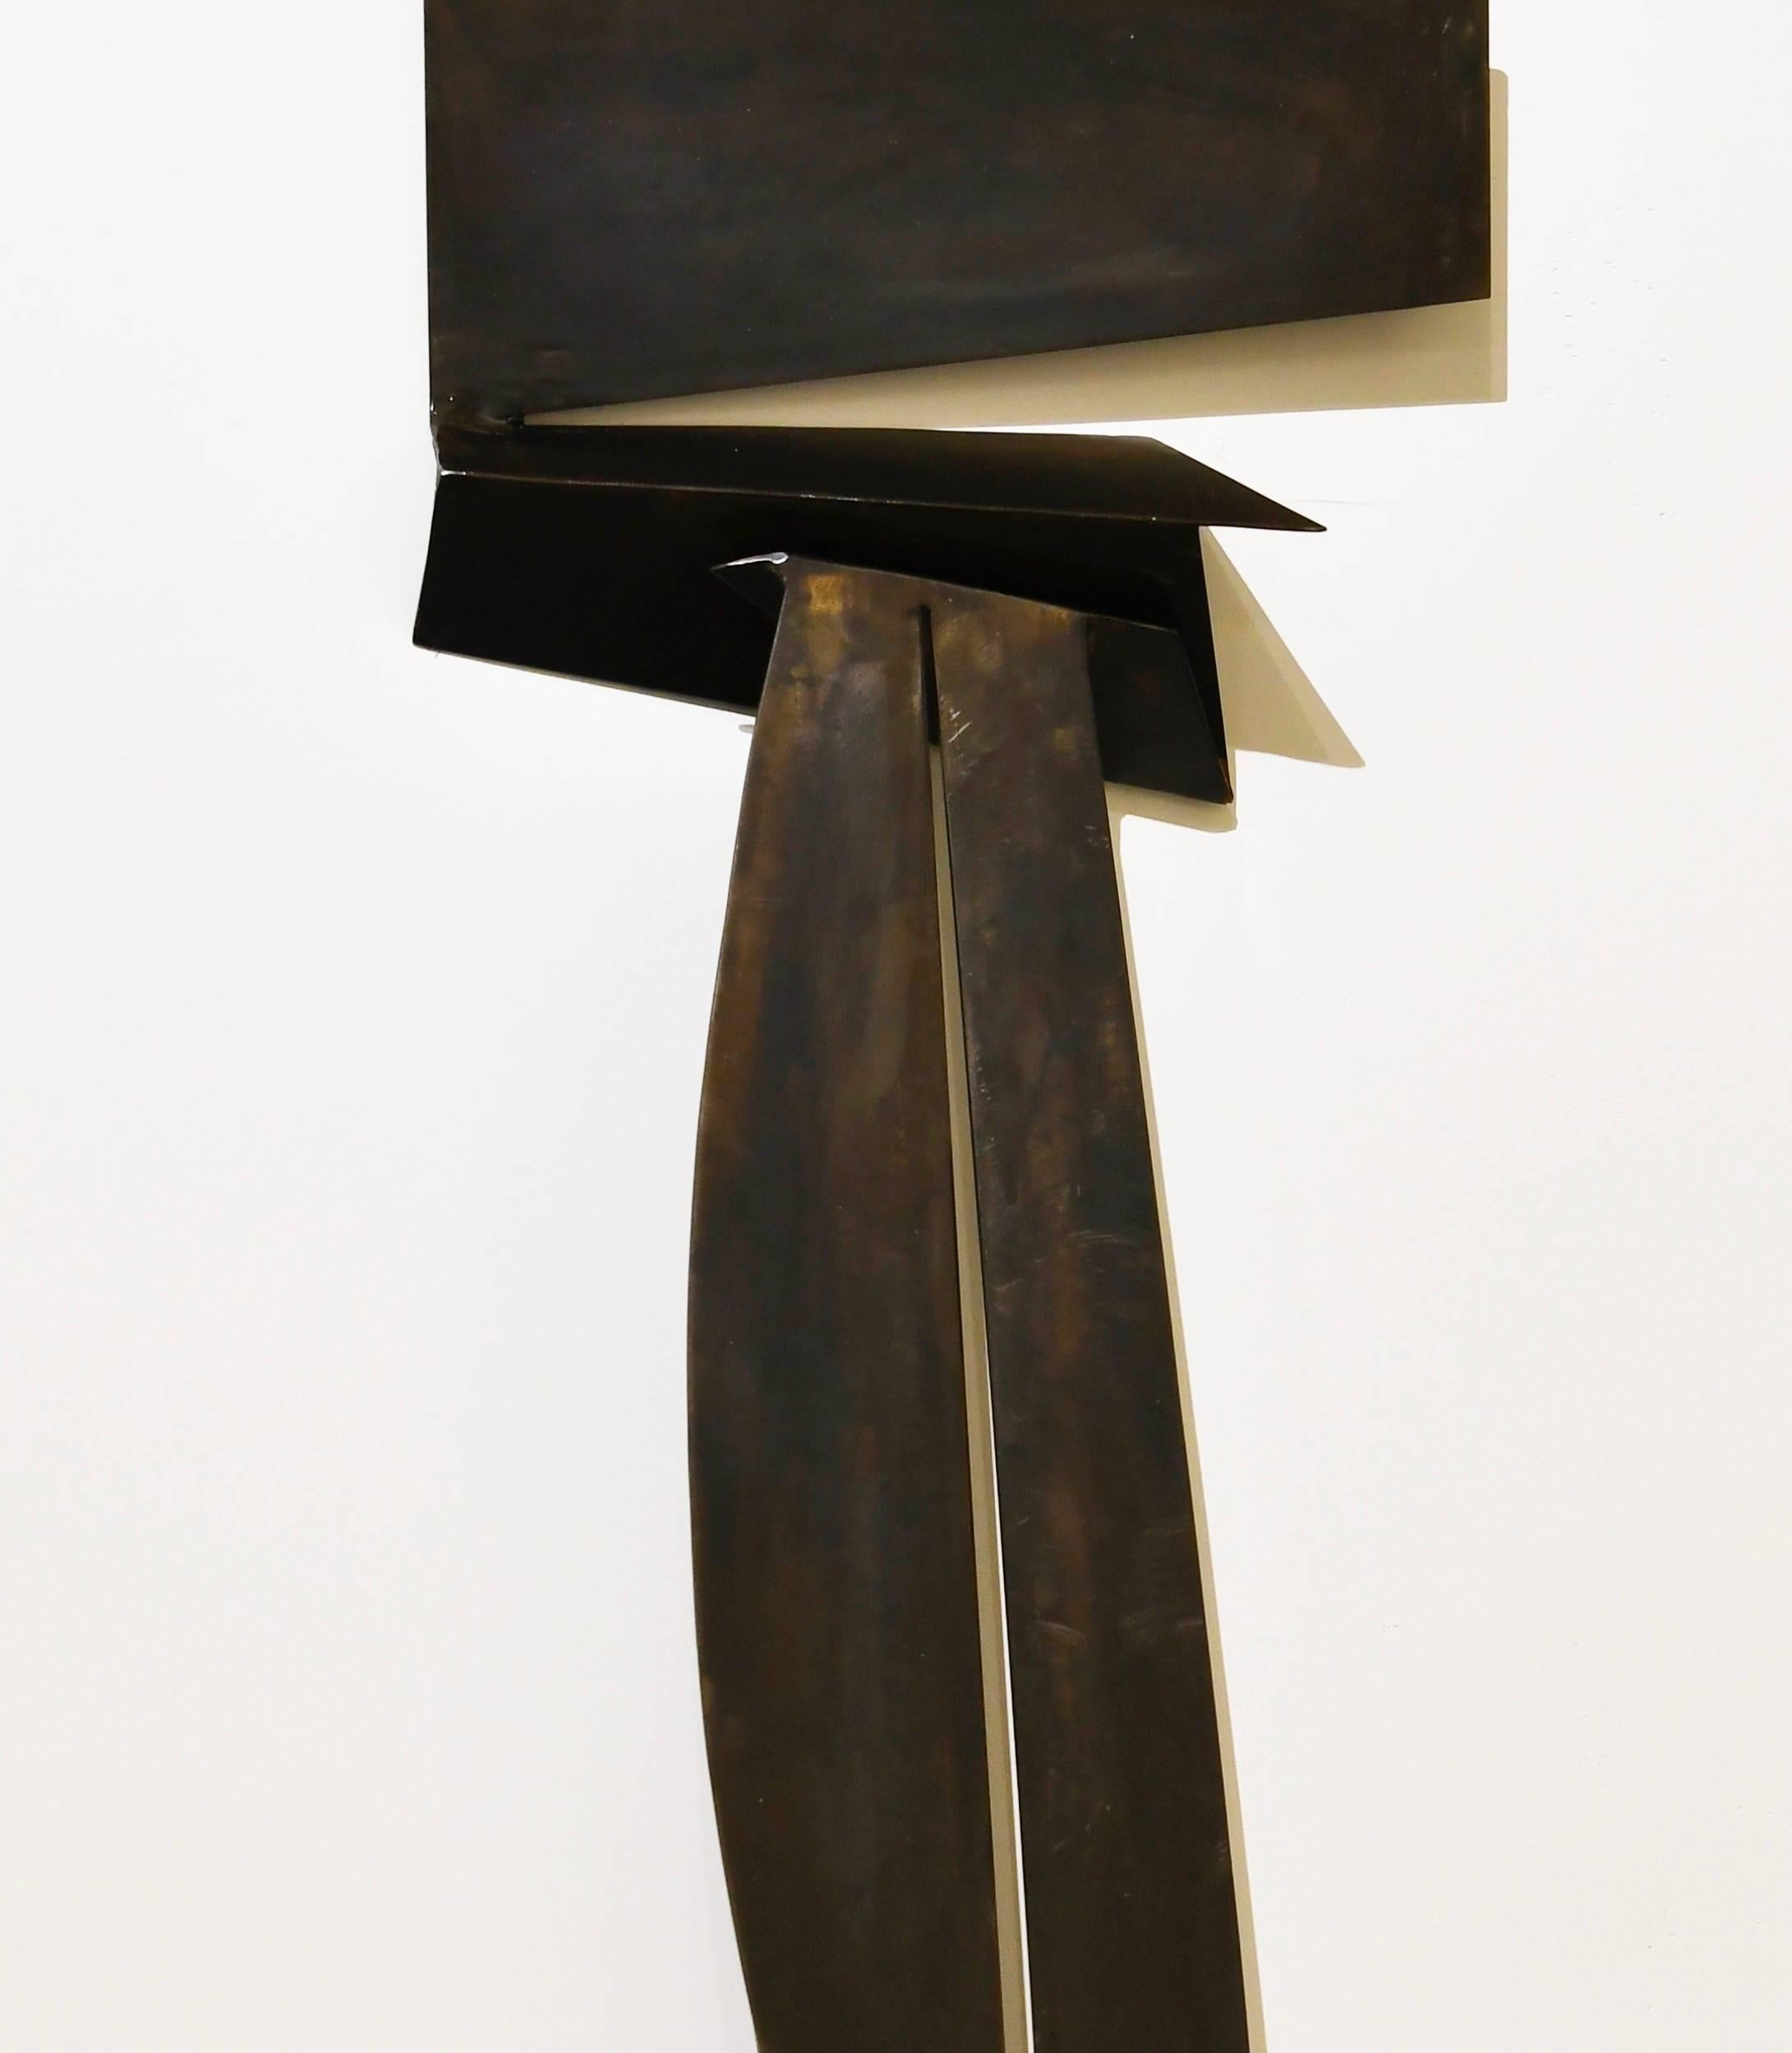 Joe Wheaton Abstract Sculpture - The Innocence of Hope